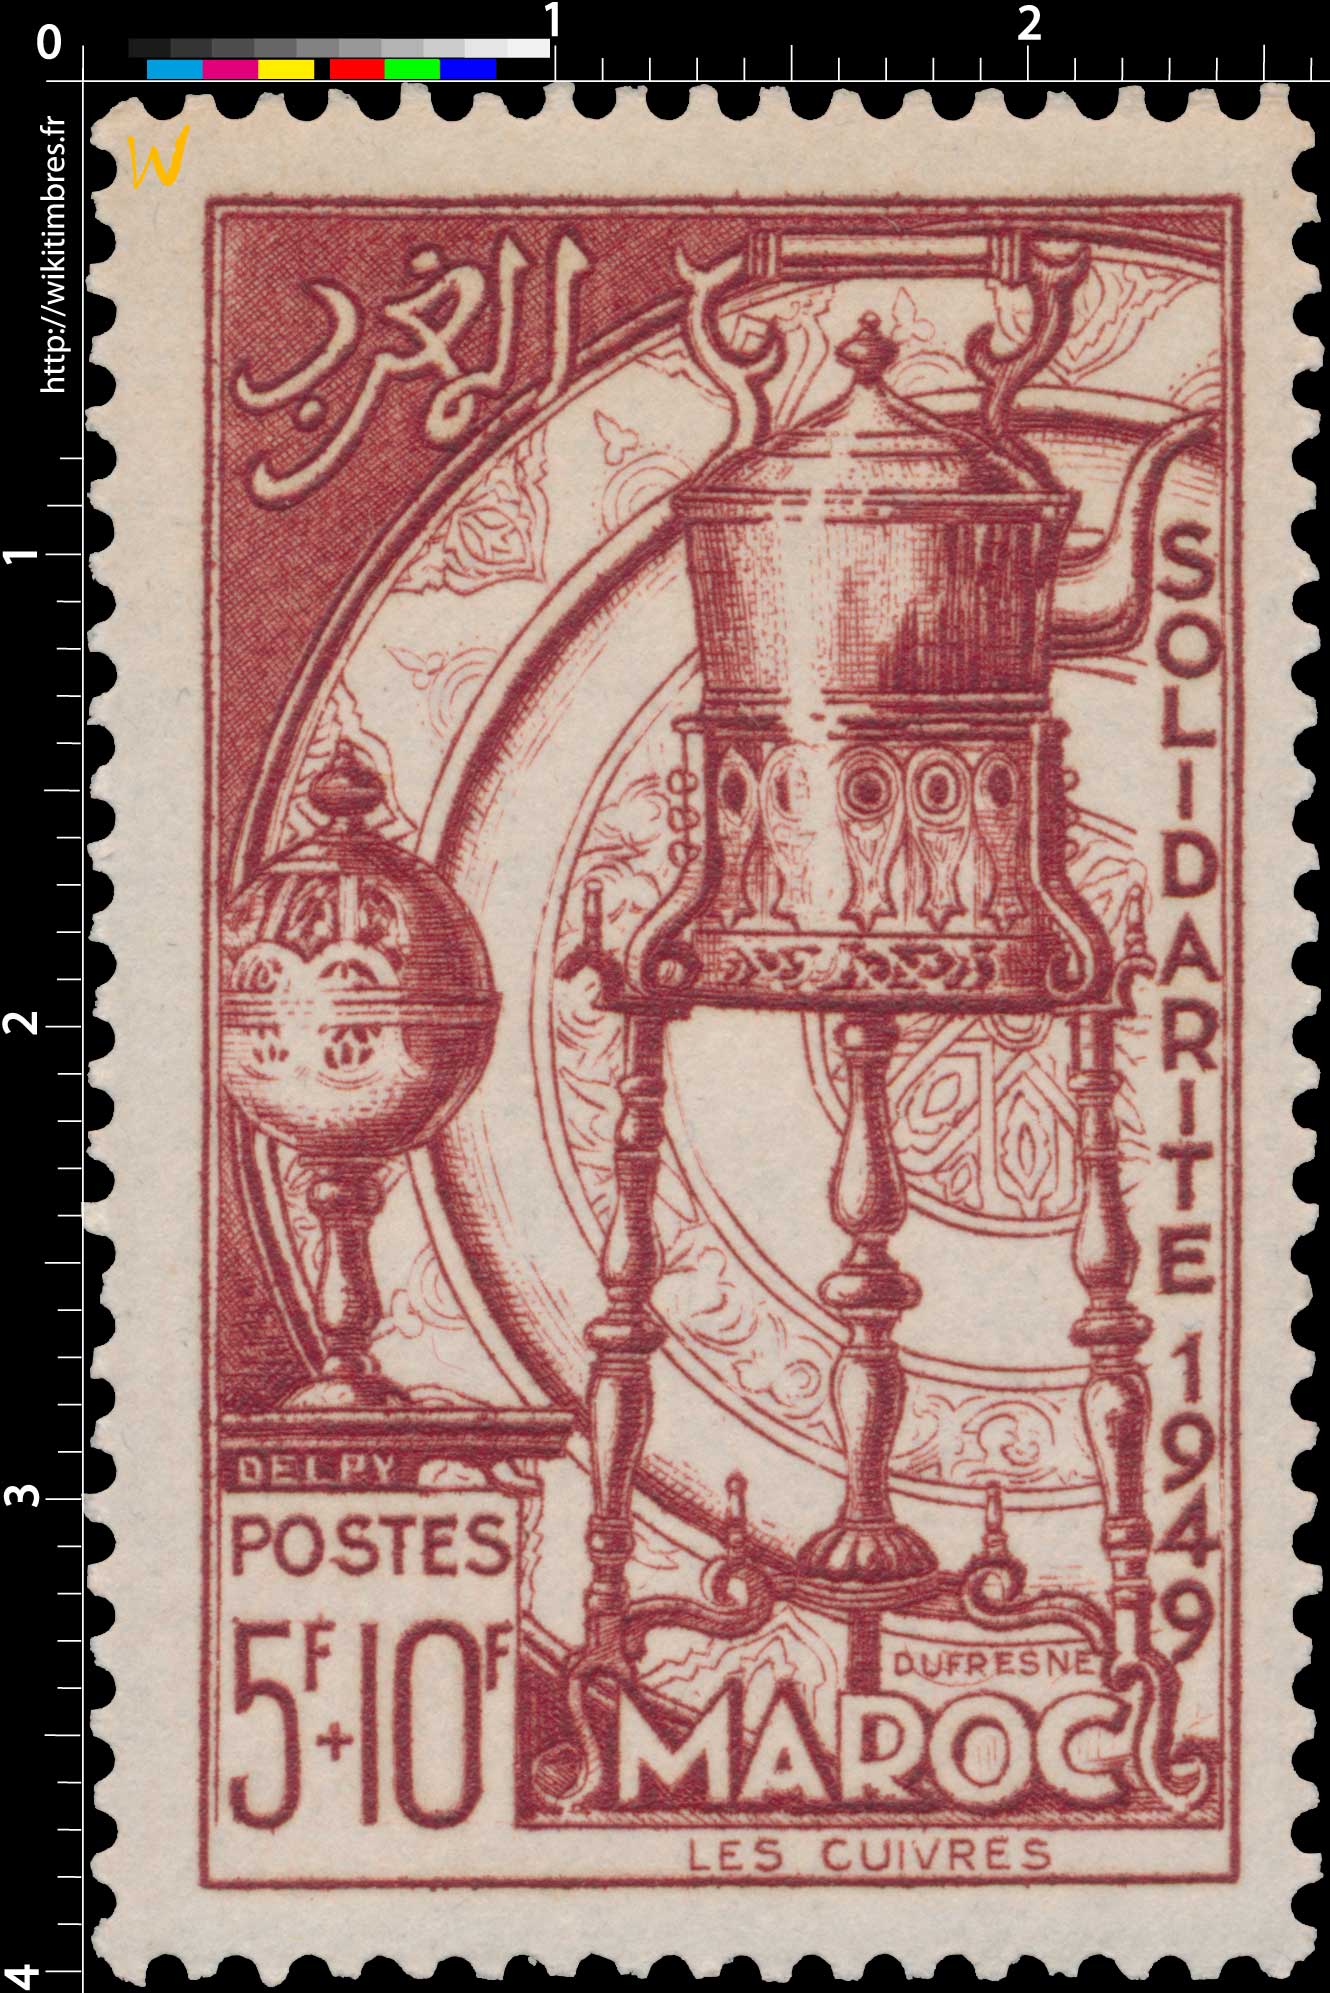 1950 Maroc - Cuivres